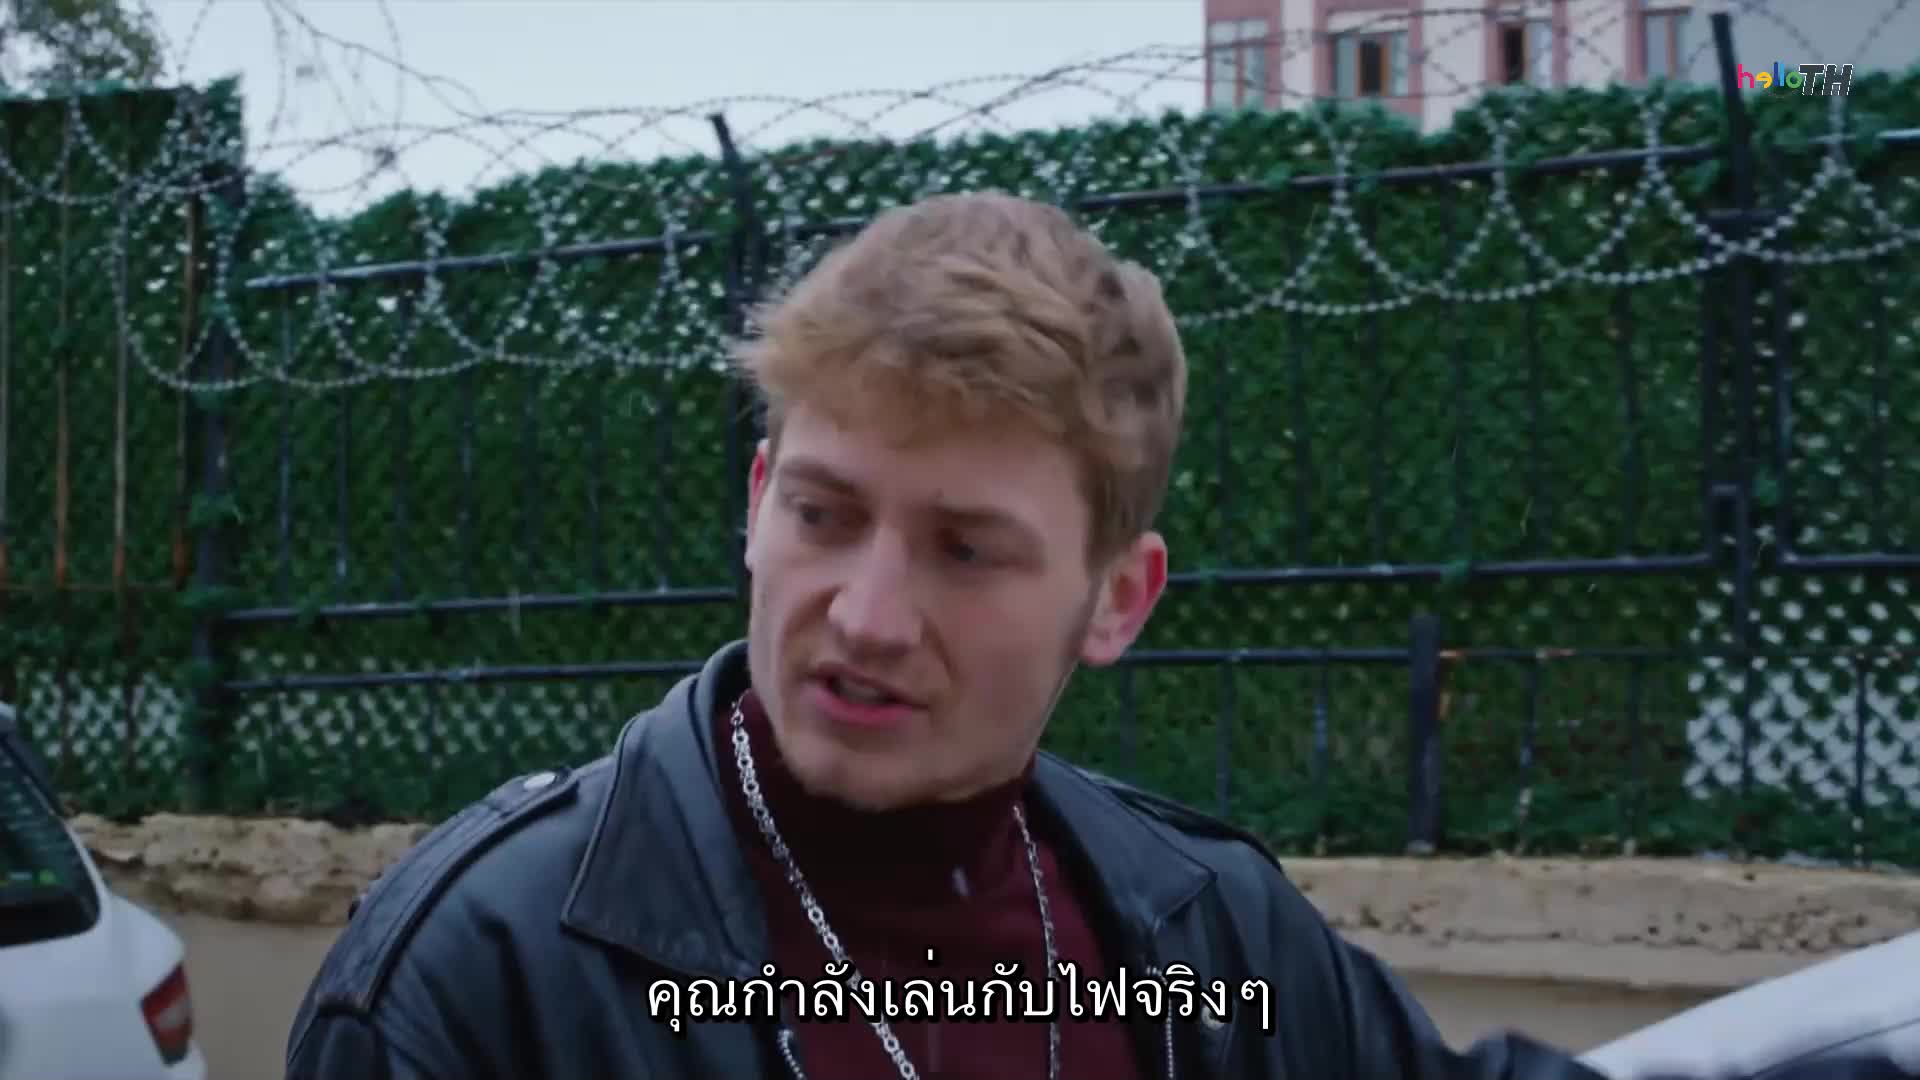 Aşk Mantık İntikam ซับไทย ปี1 EP30